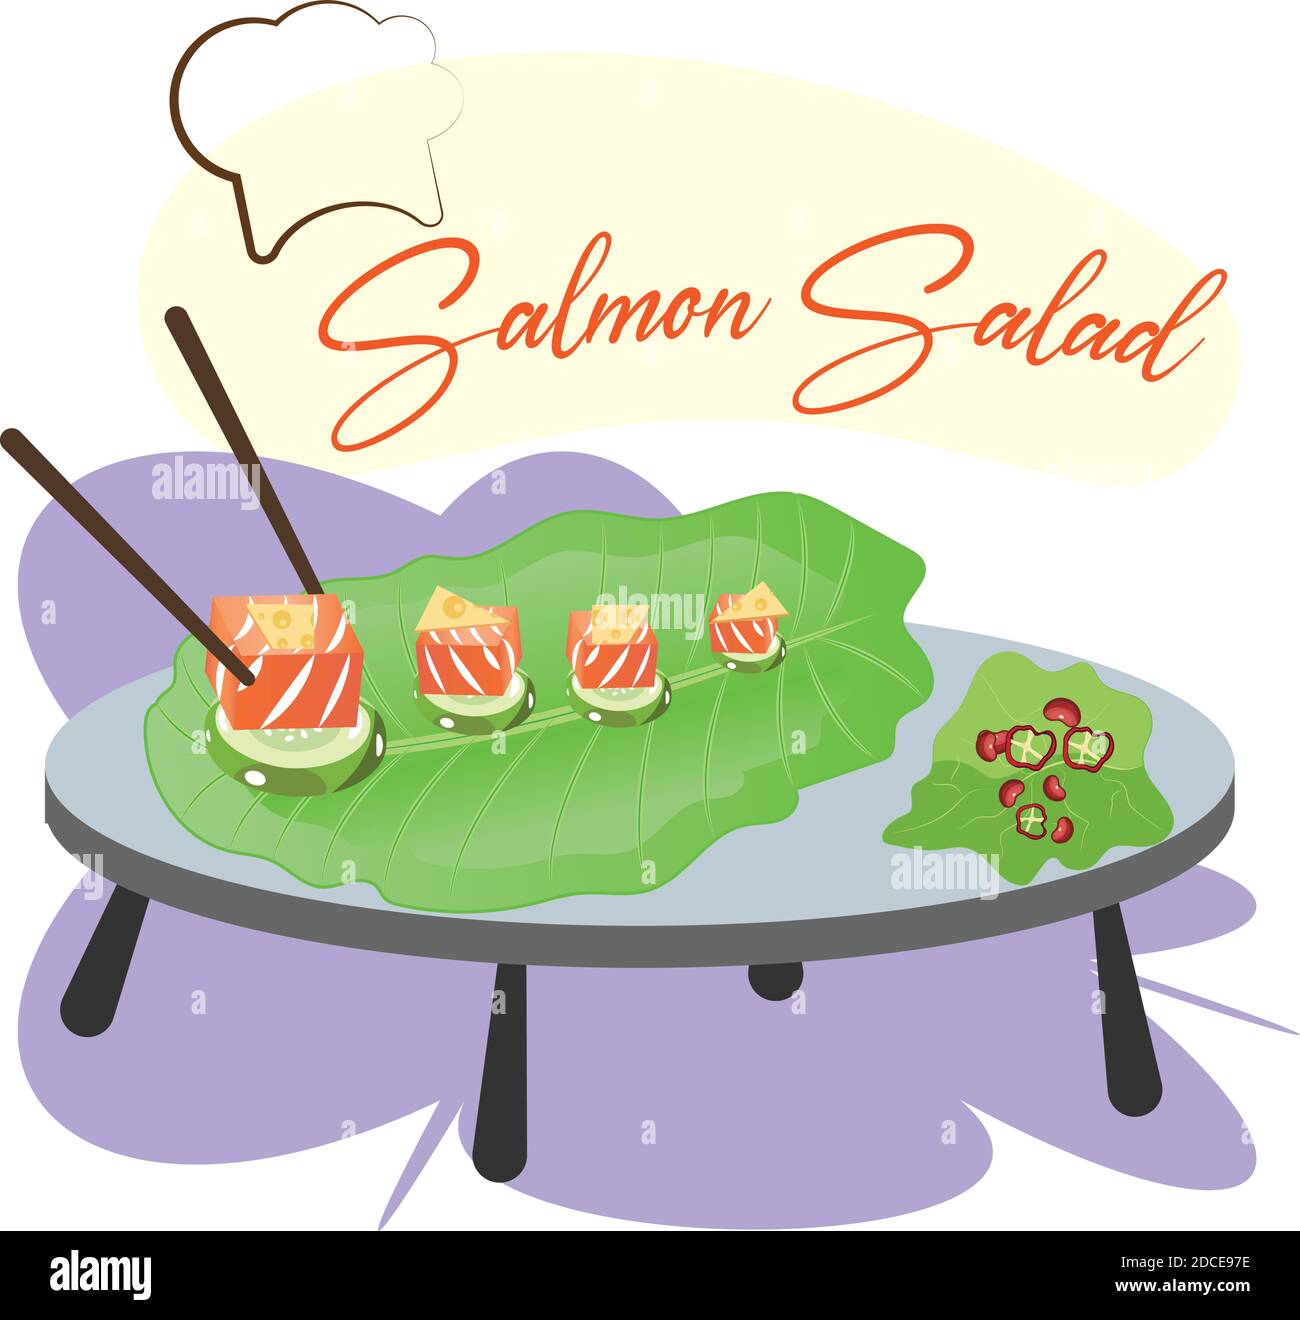 Salmon salad poster Stock Vector